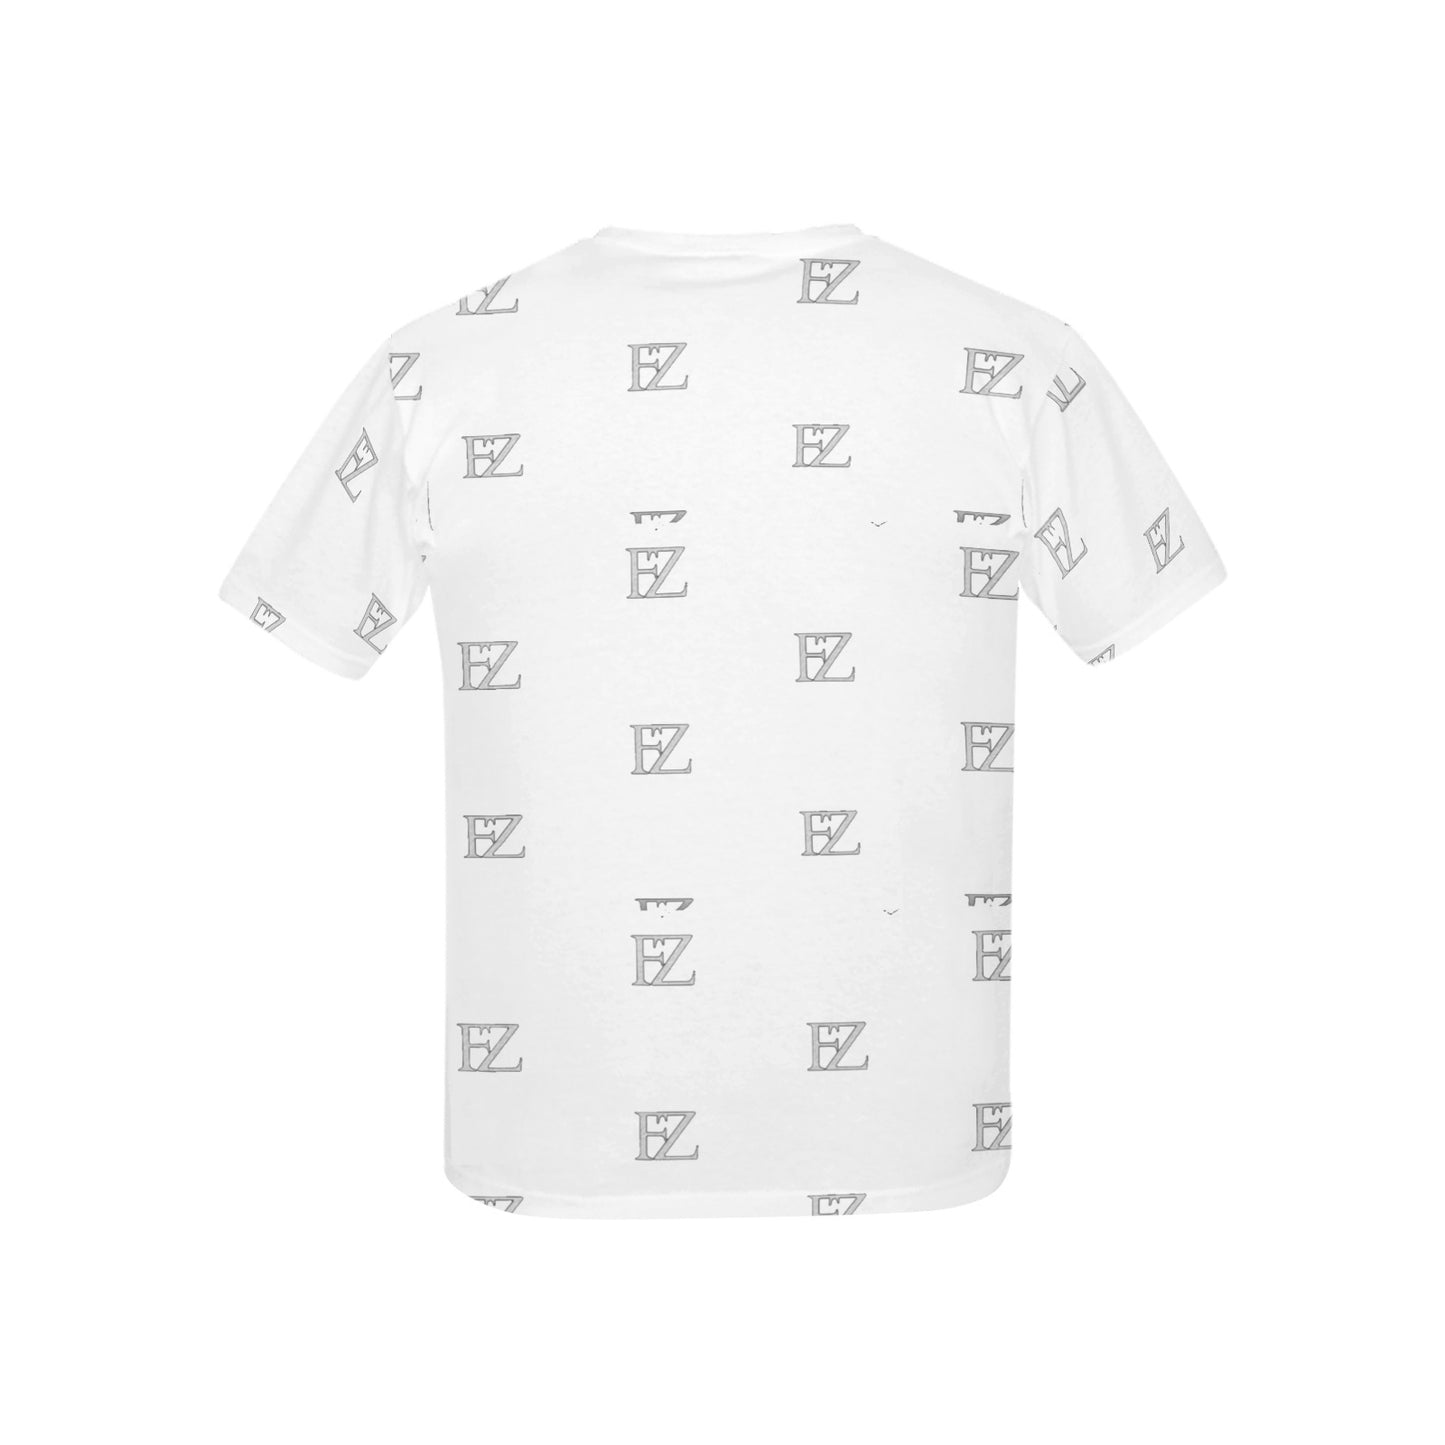 fz kids tee - white kid's all over print t-shirt(usa size)(model t40)